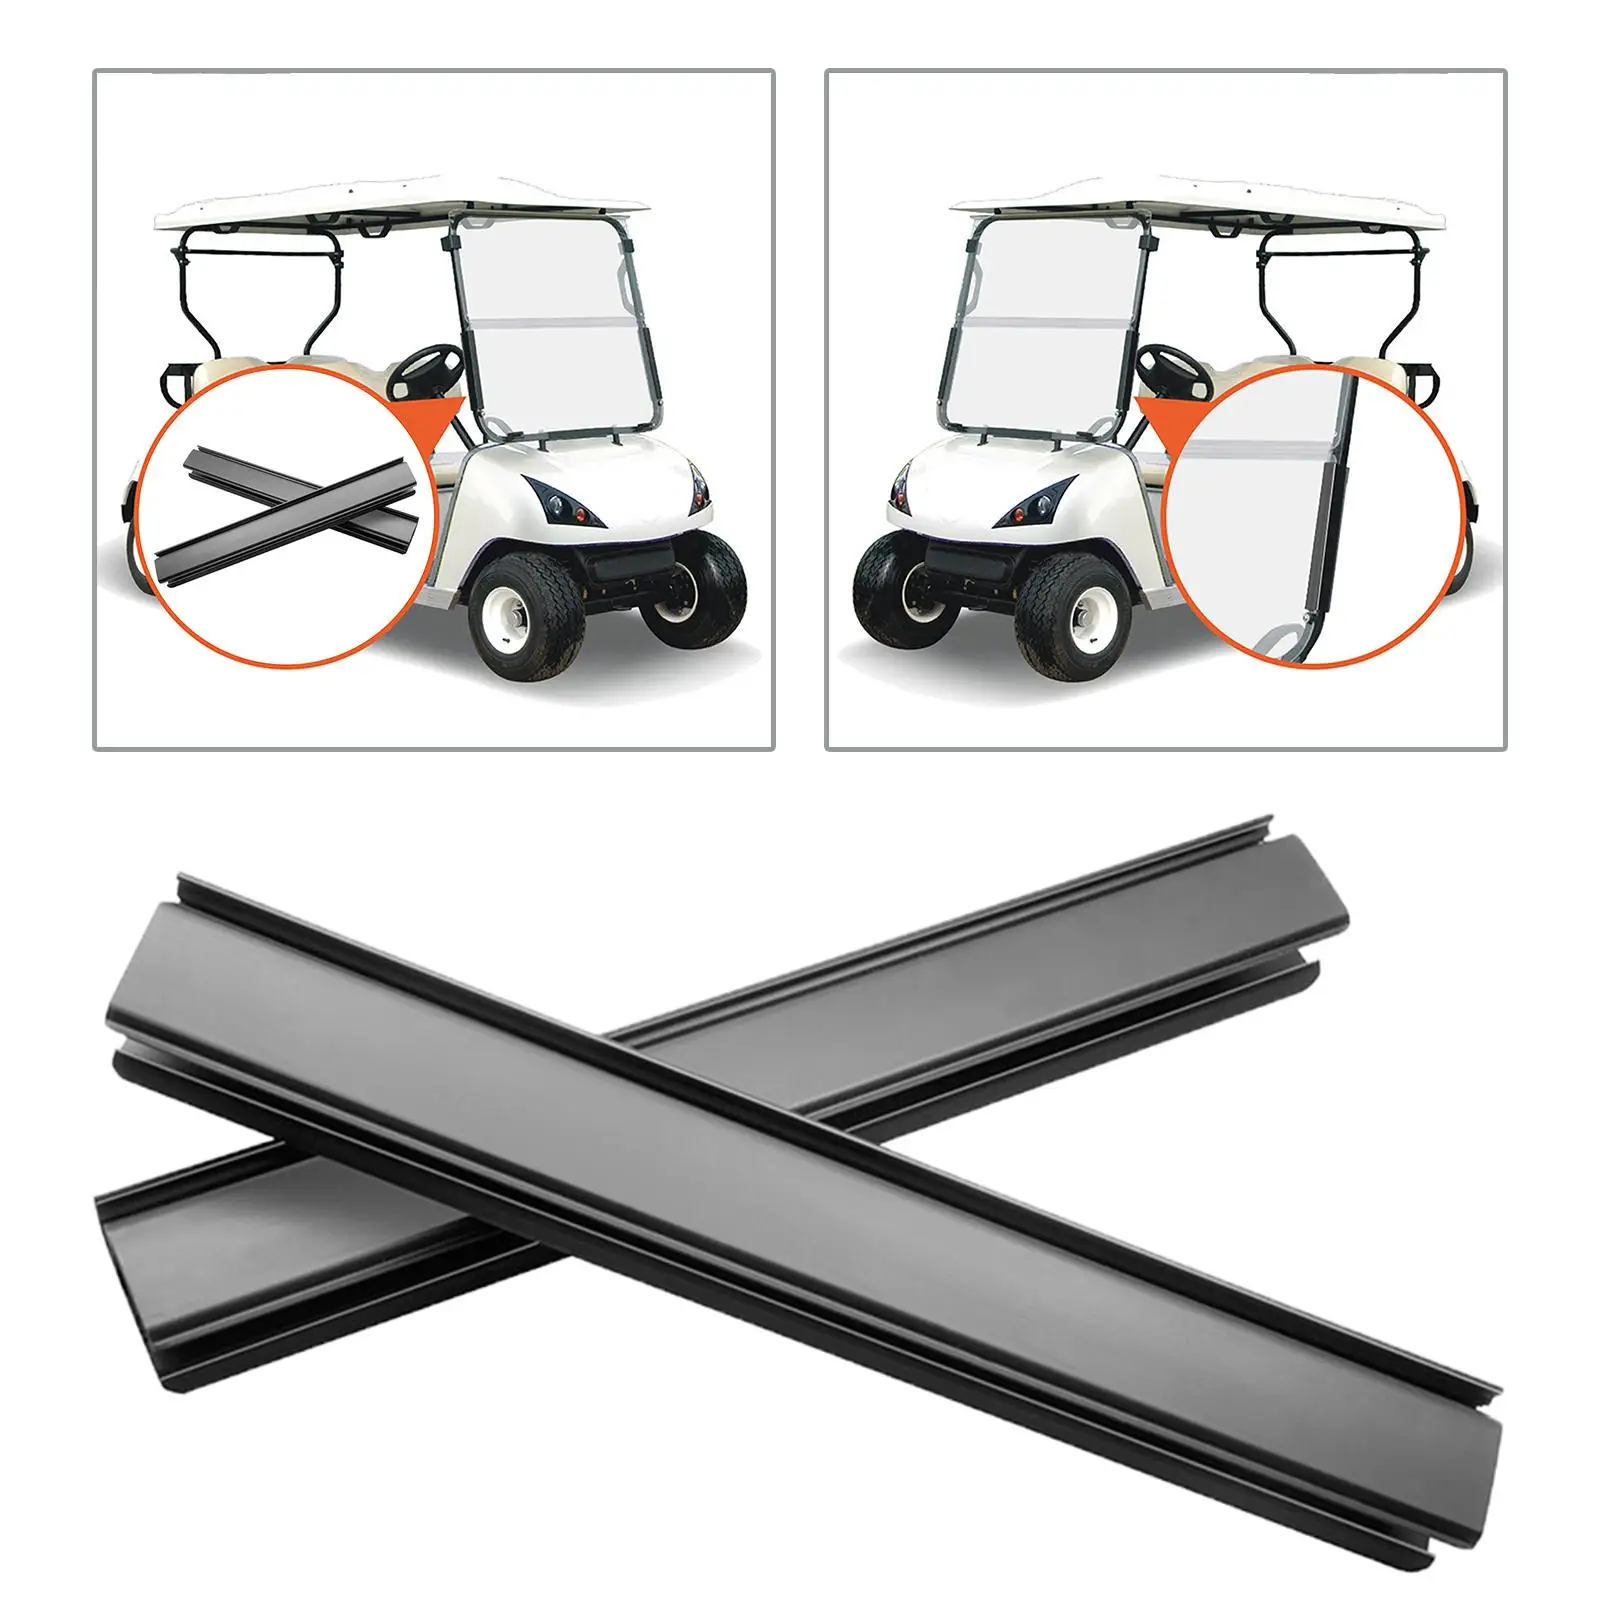 2x 32 cm Golf Cart Windshield Sash Clips 1021630-01 Plastic for Precedent Holder Black Club Car Accessories Hardware Body Kit